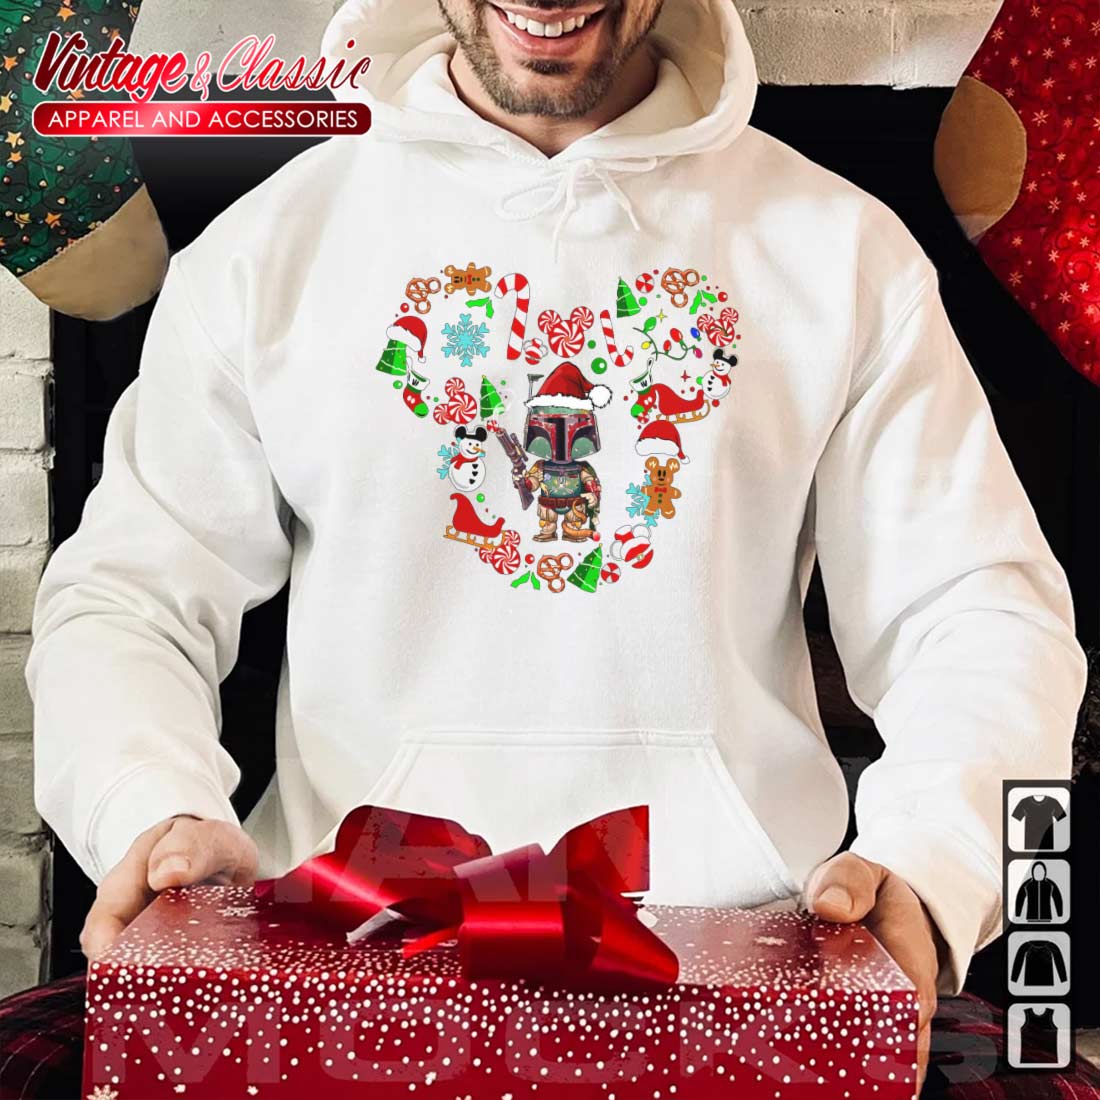 Lokken Hangen huid Star Wars Christmas Shirt, Mandalorian Disney Christmas Shirt -  High-Quality Printed Brand